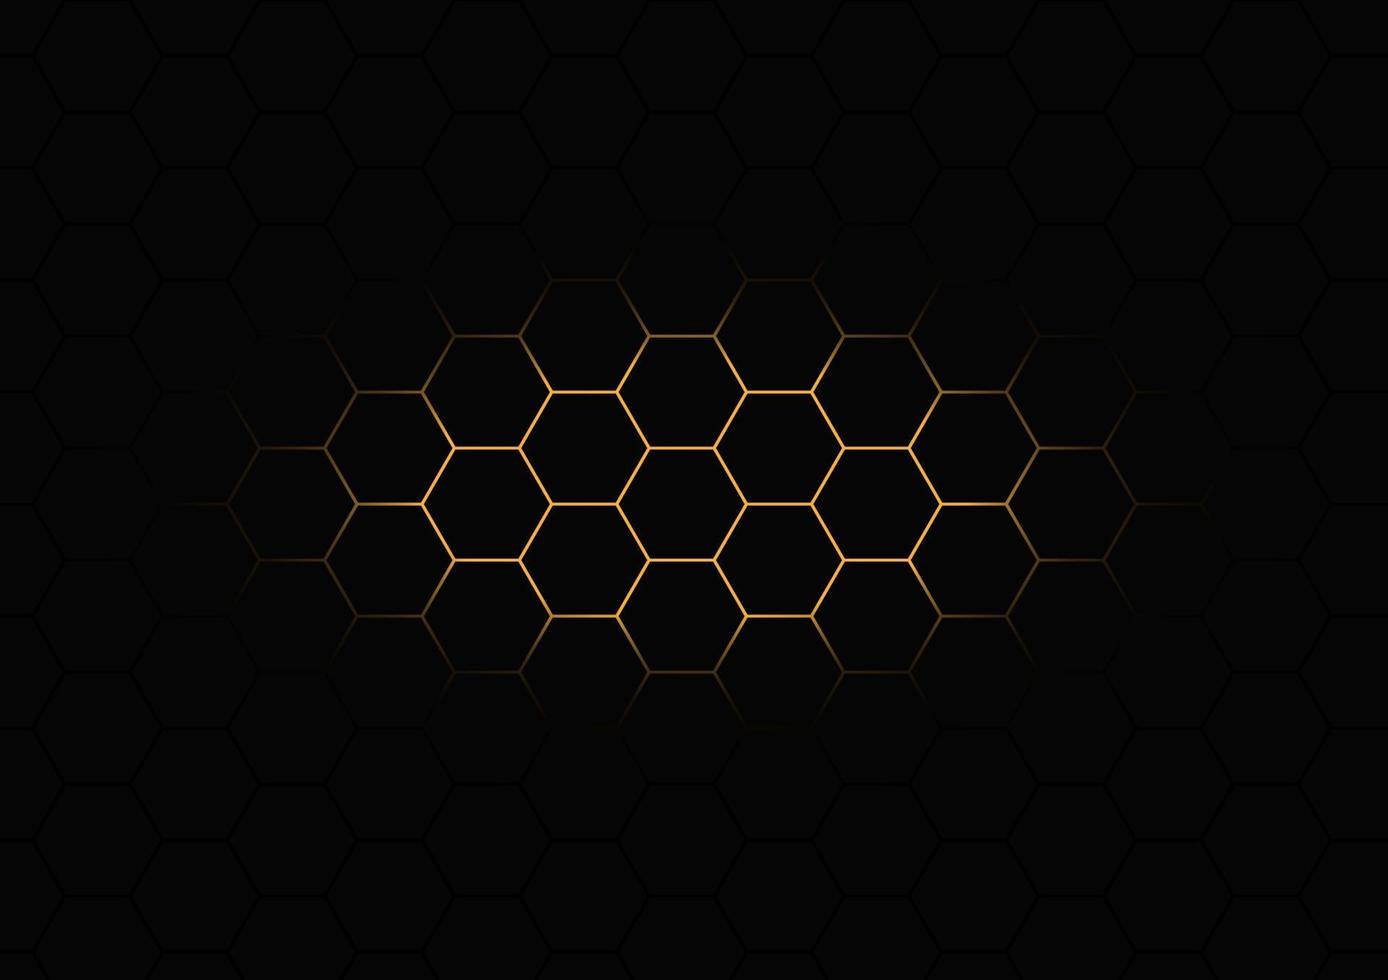 abstract background hexagonal gray tone pattern vector illustration